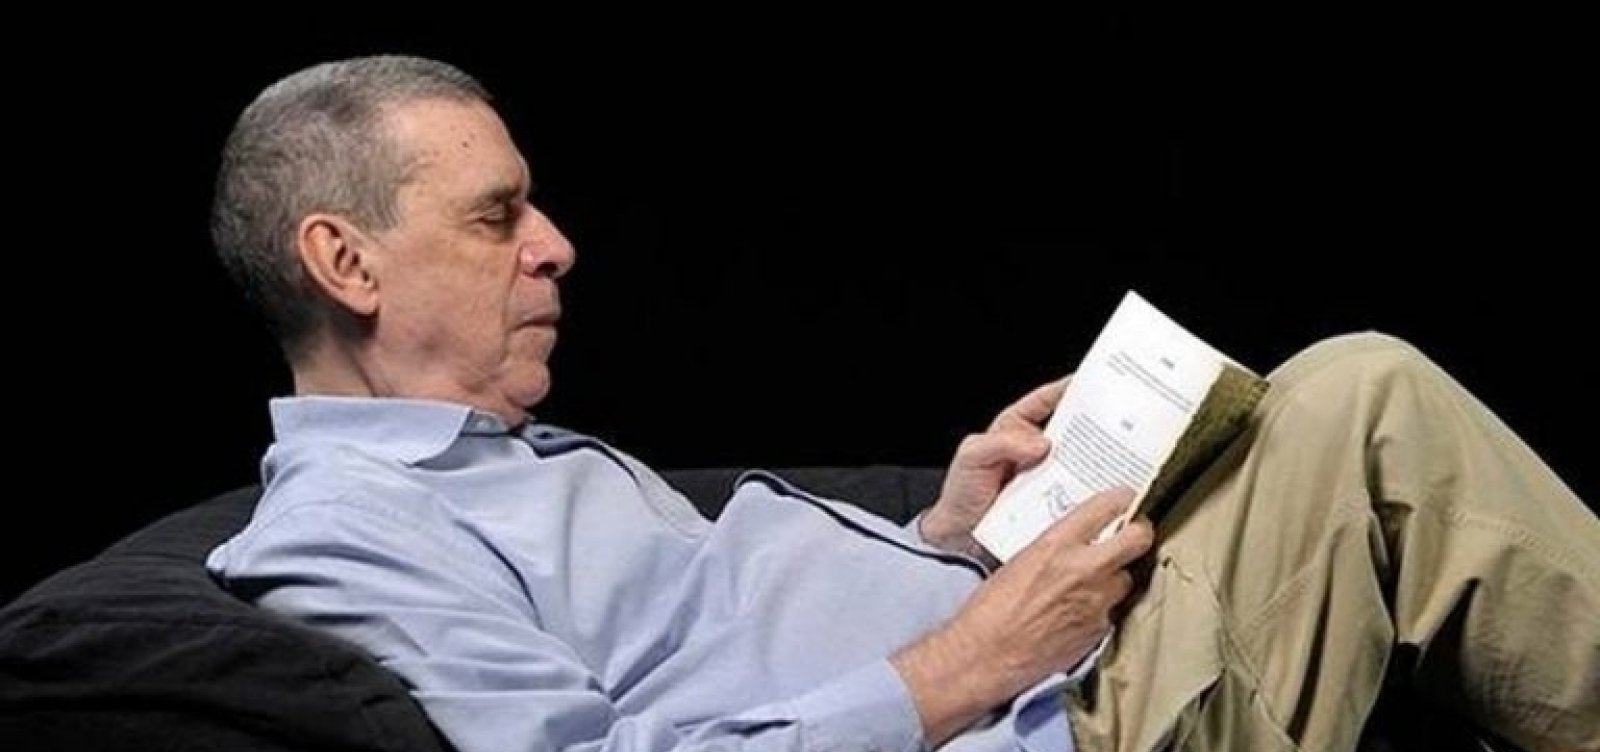 Morre Sérgio Sant'Anna, um dos principais escritores brasileiros, vítima de coronavírus